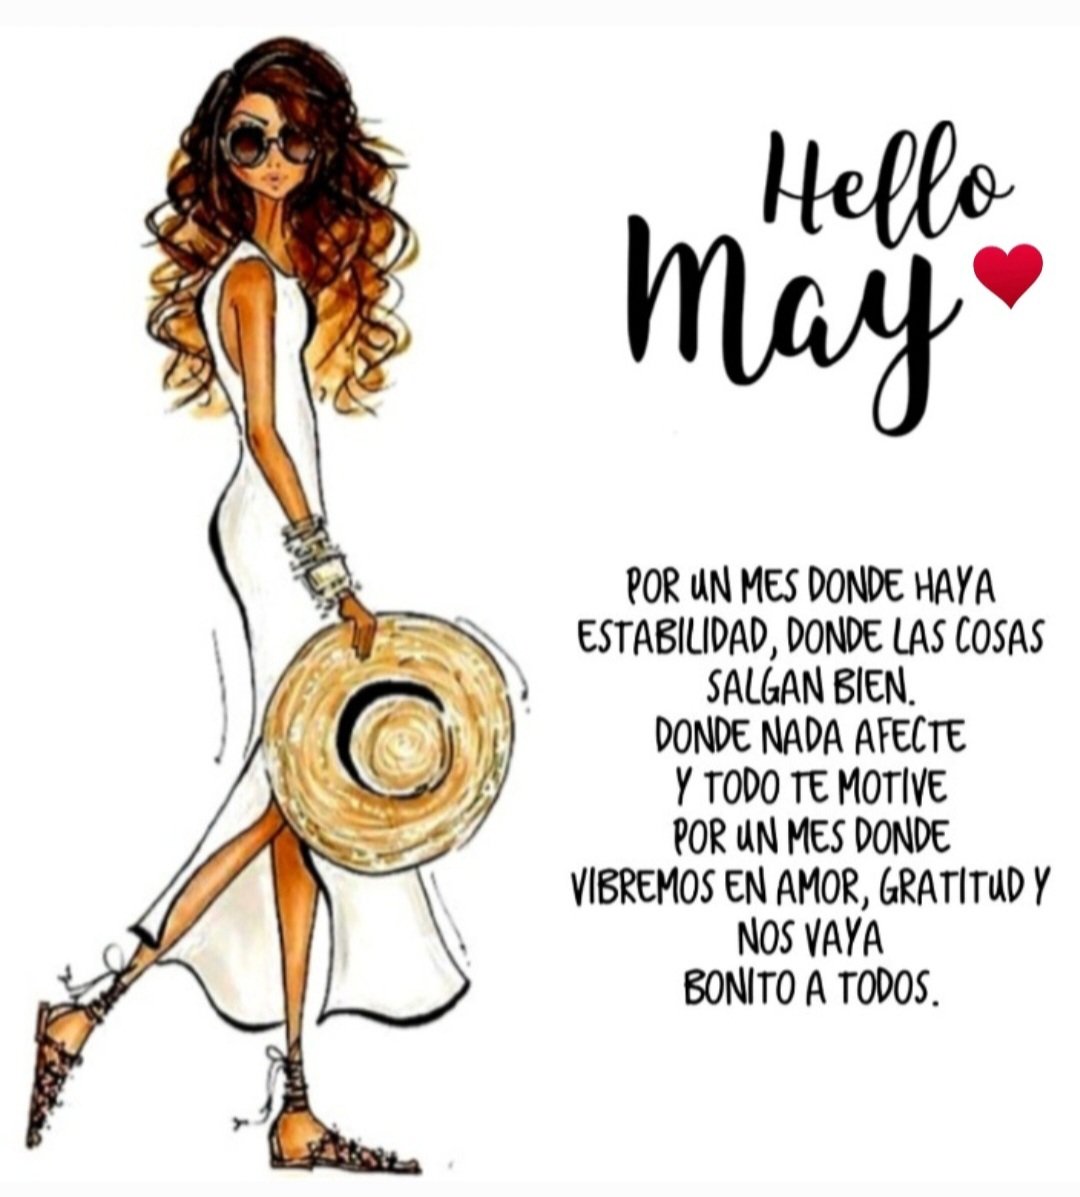 #Mayo2024 #HelloMay #FelizInicioDeMes #Amor #Gratitud #Motivación 
#LaVidaEsBella #Sonrie #GoodVibesOnly #BeHappy
#BuenosPropósitos #BuenosDeseos #QueTodoEstéBien
🌸🌺🌷💖💕